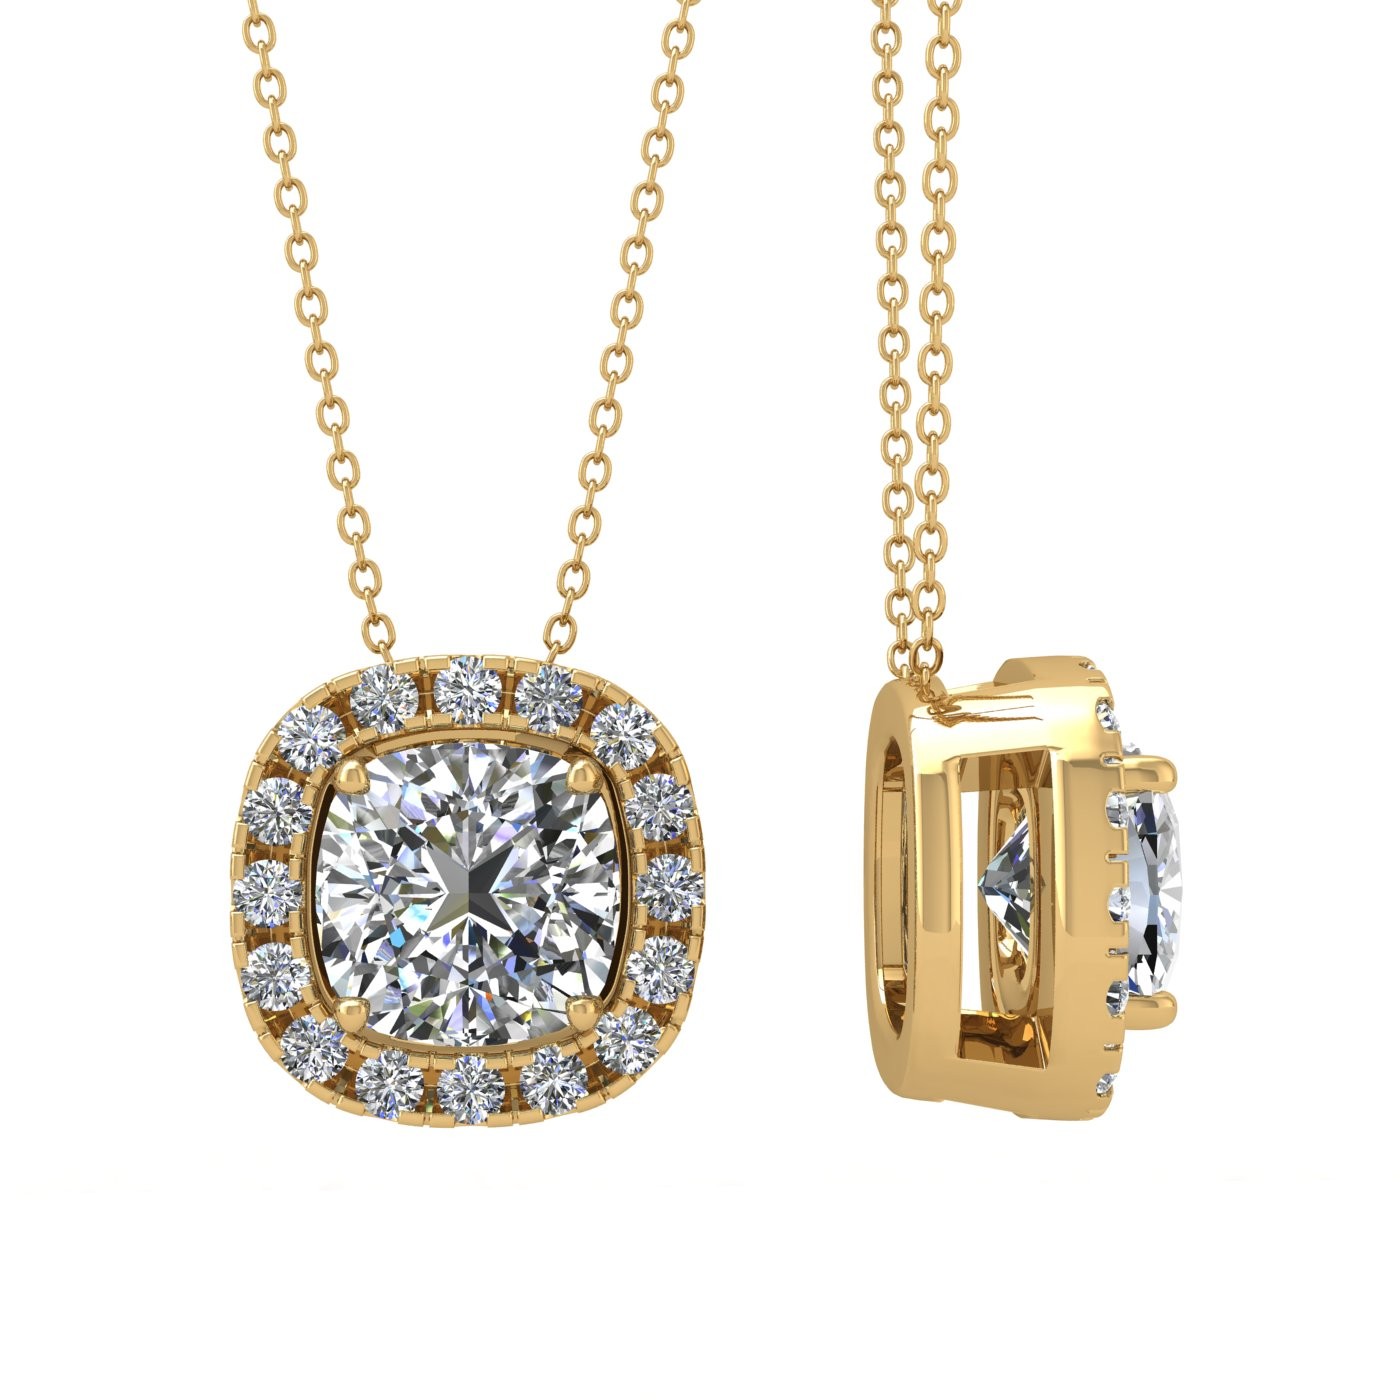 18k yellow gold 1 ct 4 prongs cushion shape diamond pendant with diamond pavÉ set halo Photos & images